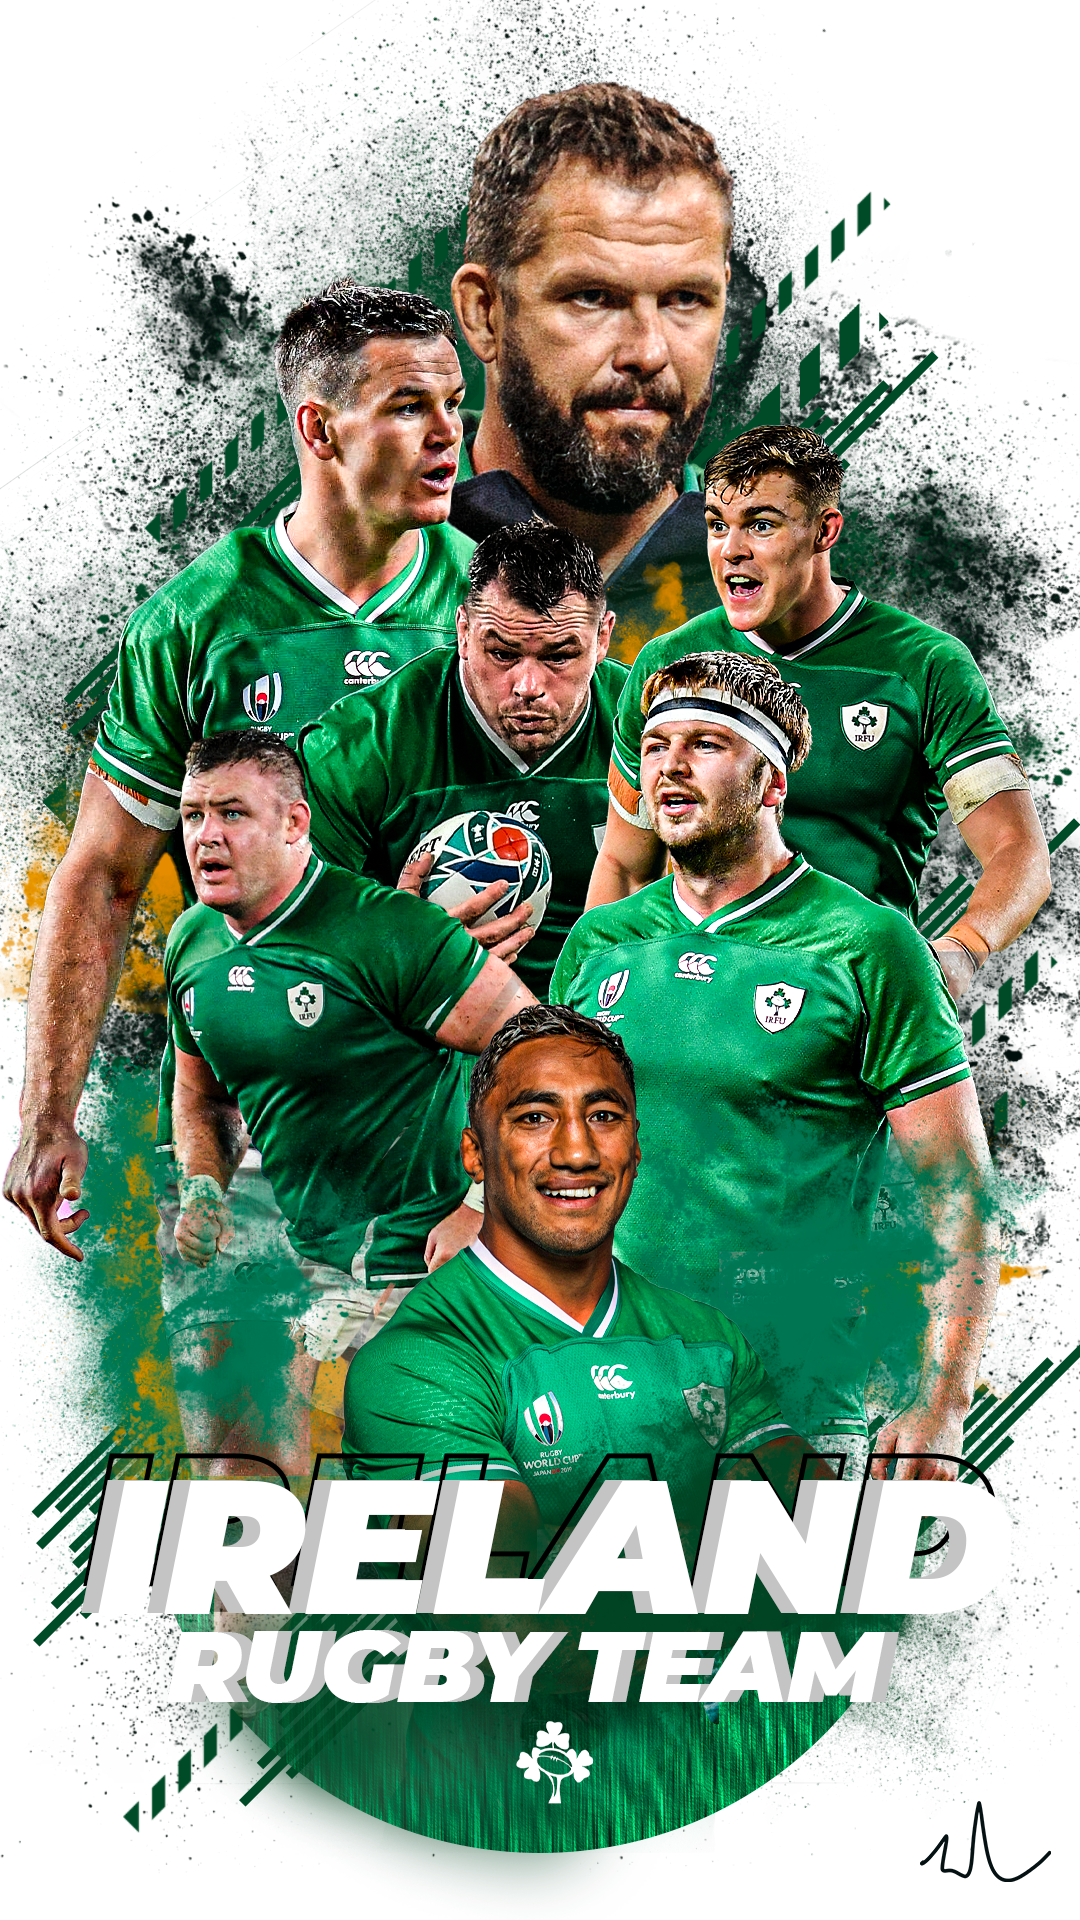 Irish Rugby team poster. Irish rugby team, Ireland rugby team, Irish rugby